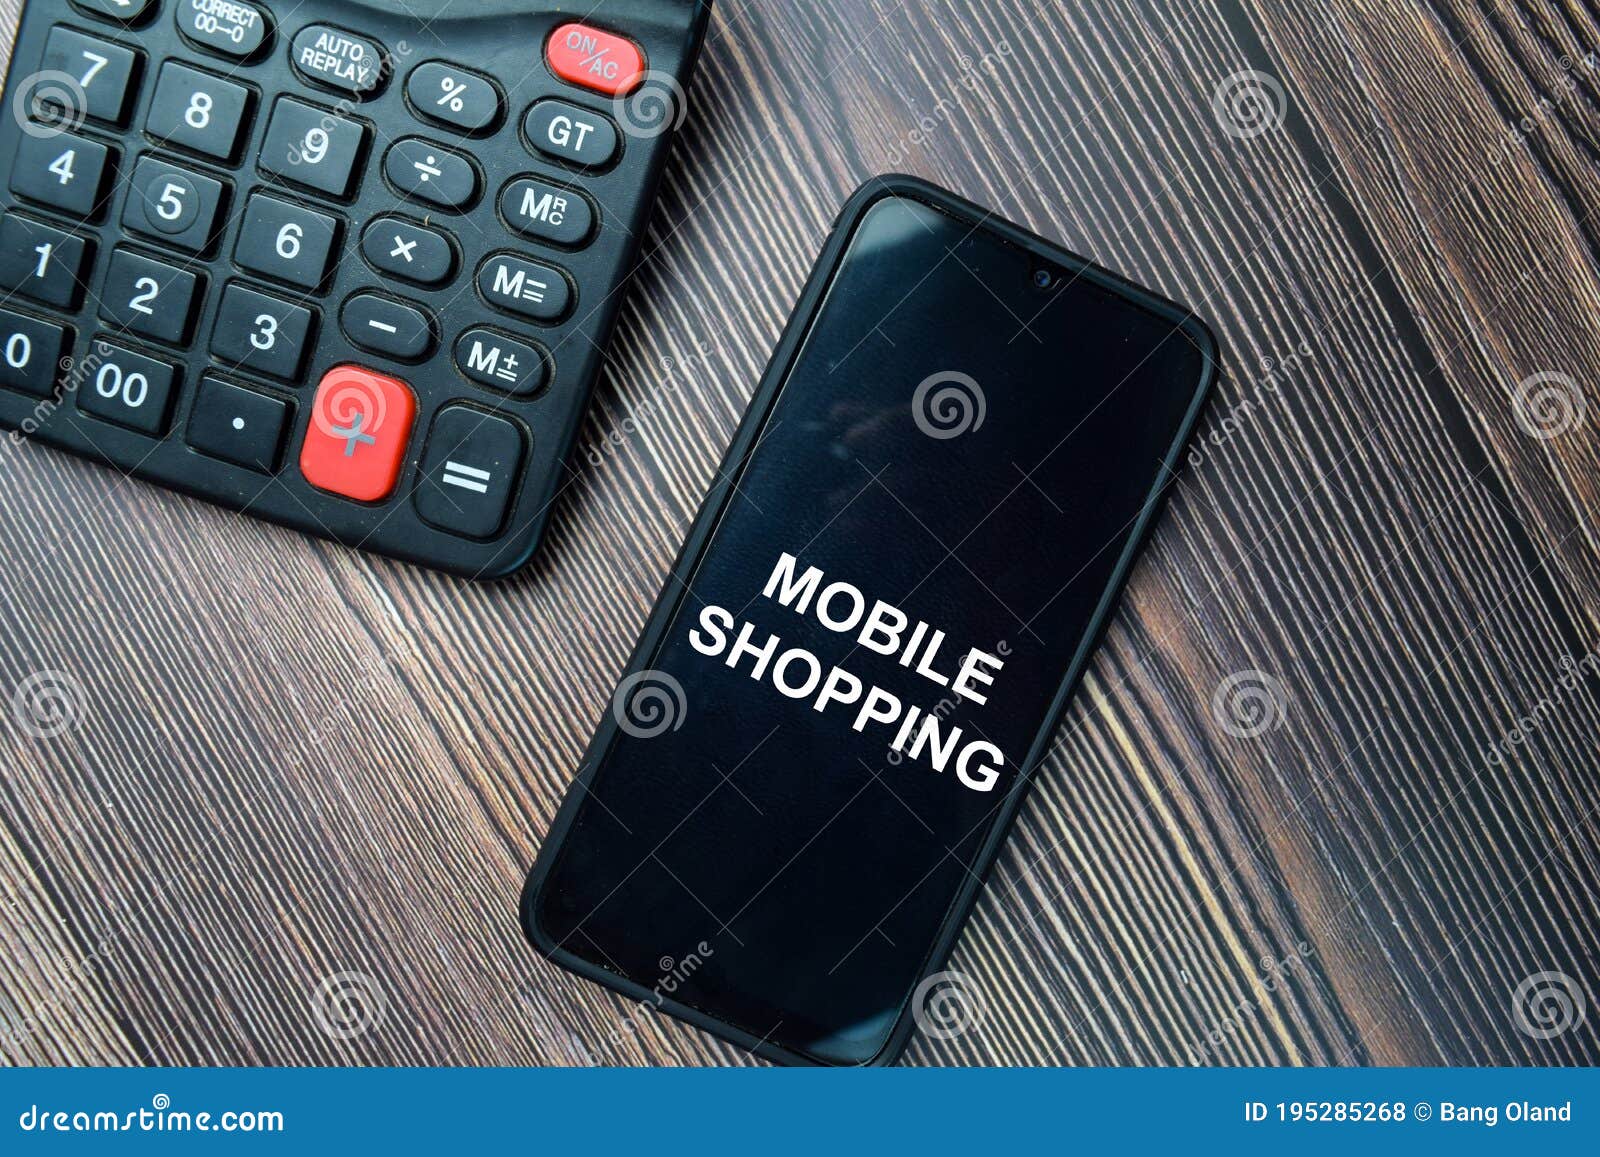 mobile shopping write on smartphone  on office desk